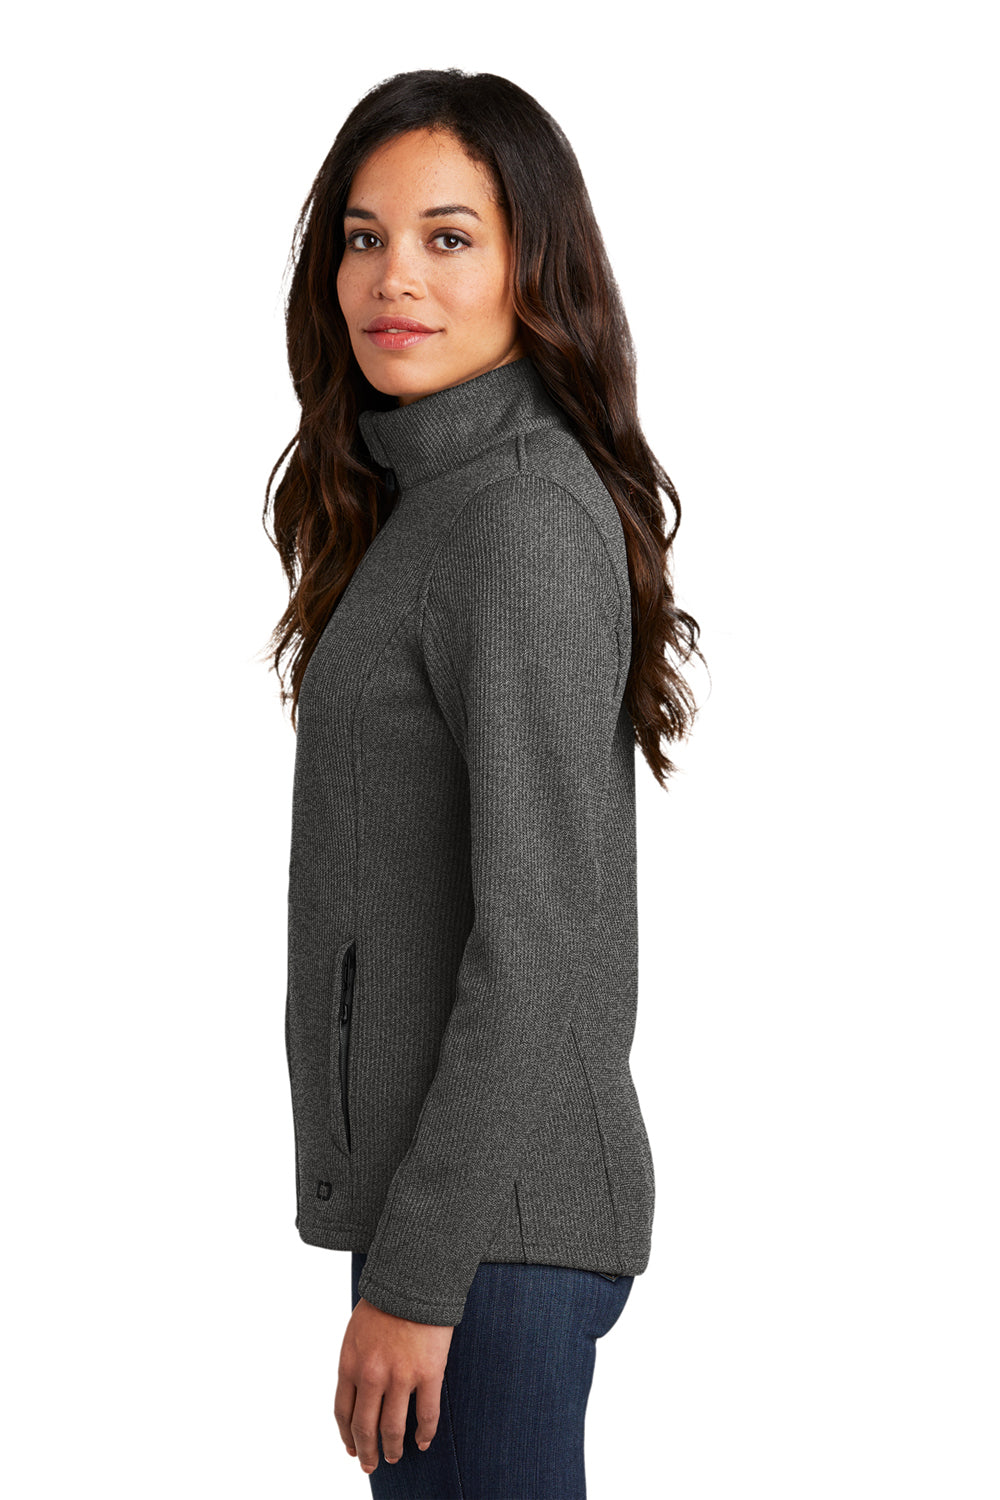 Ogio LOG727 Womens Grit Full Zip Fleece Jacket Heather Diesel Grey Side